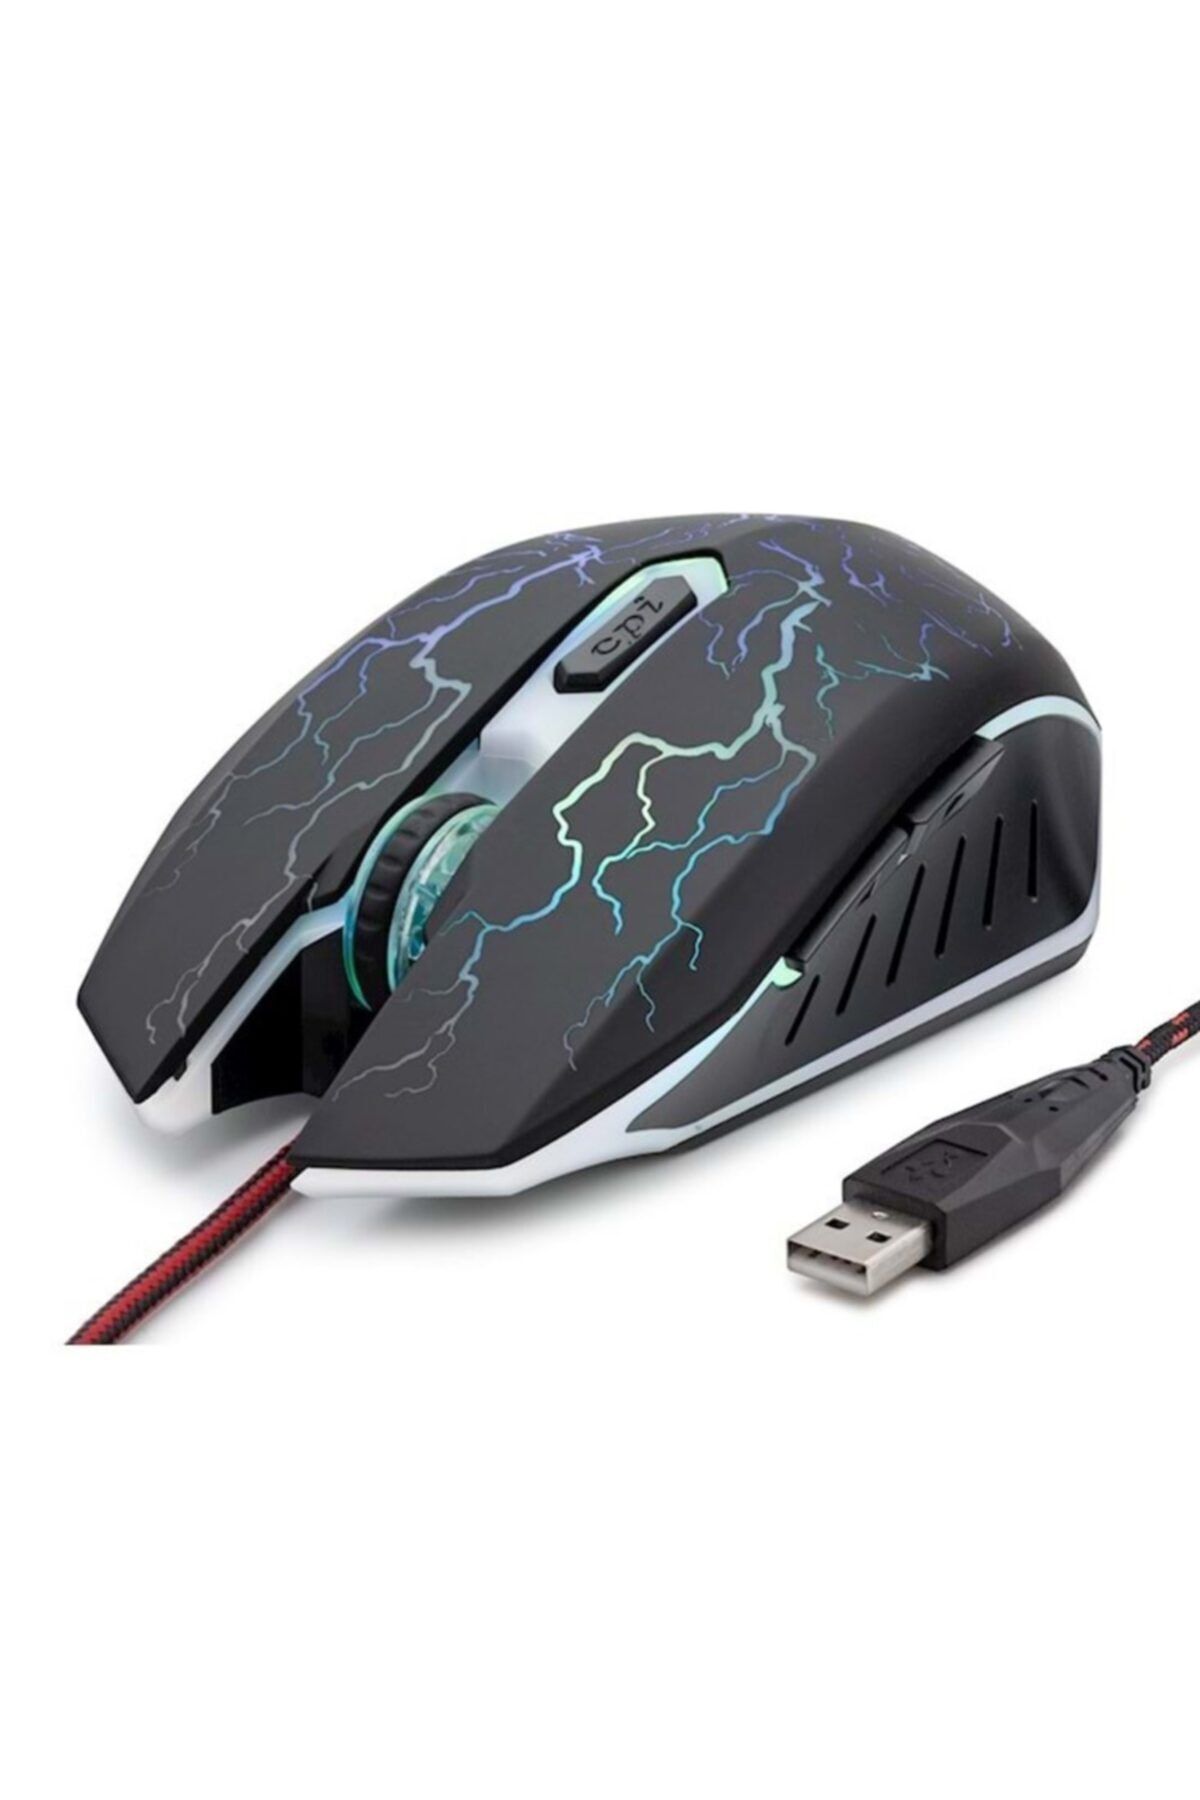 HADRON Hd5671 2400dpı Usb Işıklı Kablolu Oyuncu Gaming Mouse